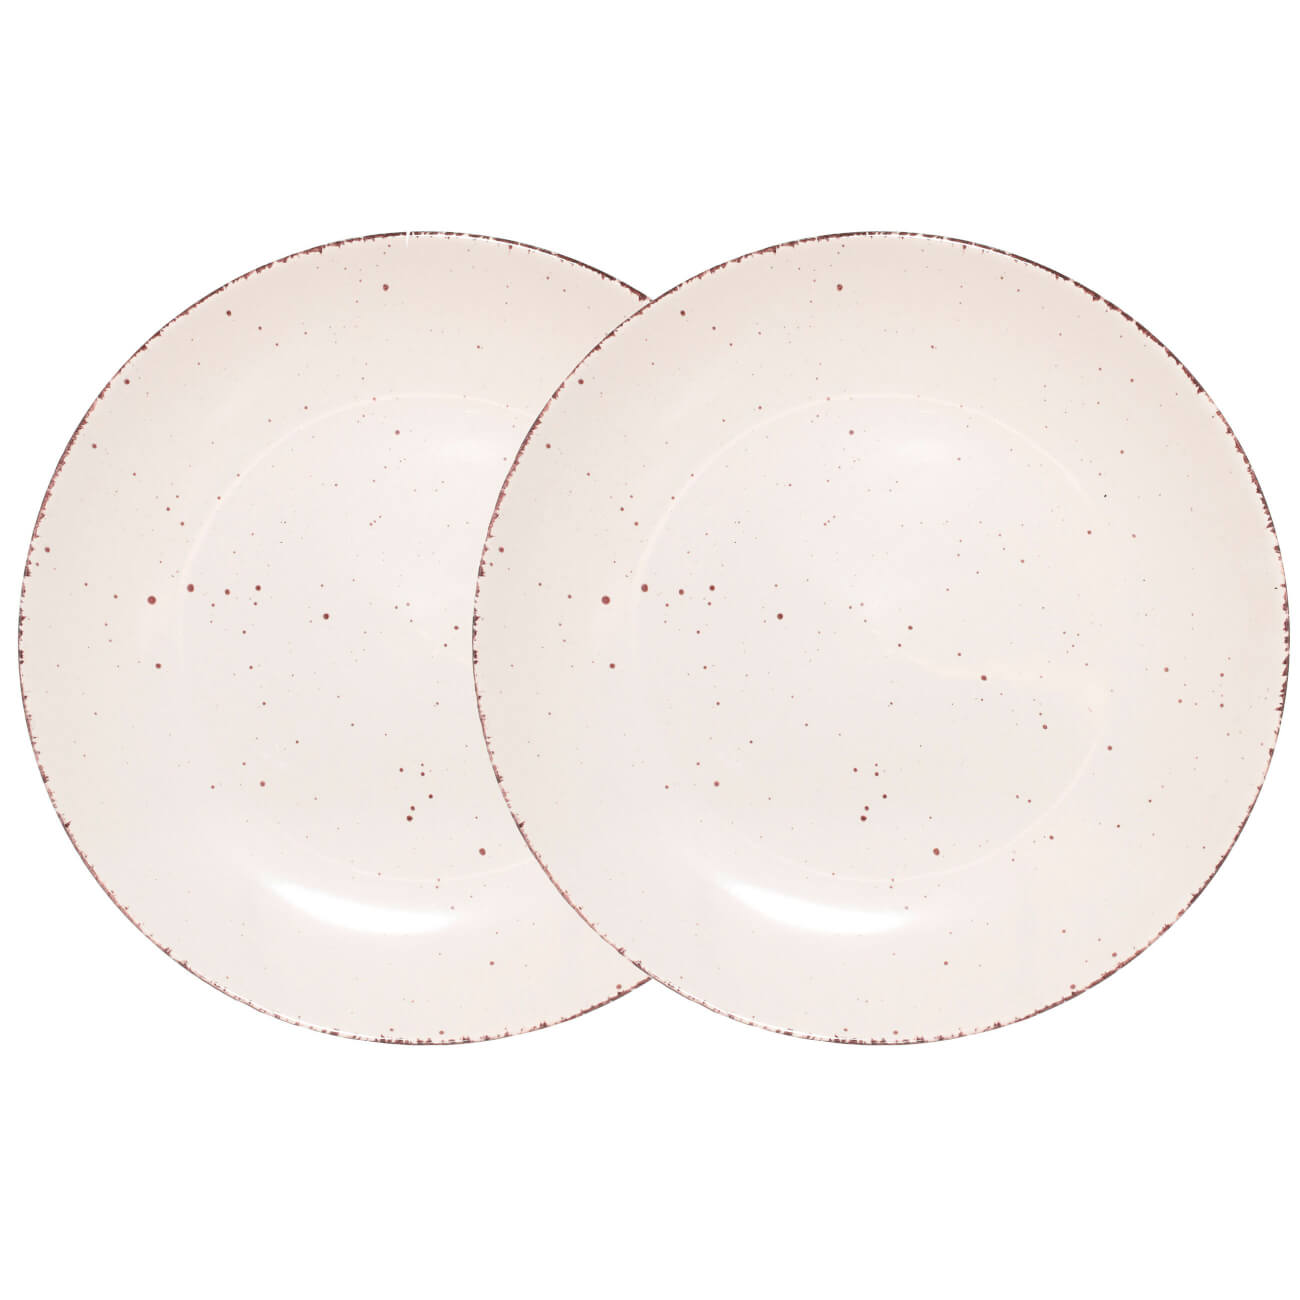 тарелка обеденная white basic 24см yuefeng yf0009 Тарелка обеденная, 27 см, 2 шт, керамика, бежевая, в крапинку, Speckled